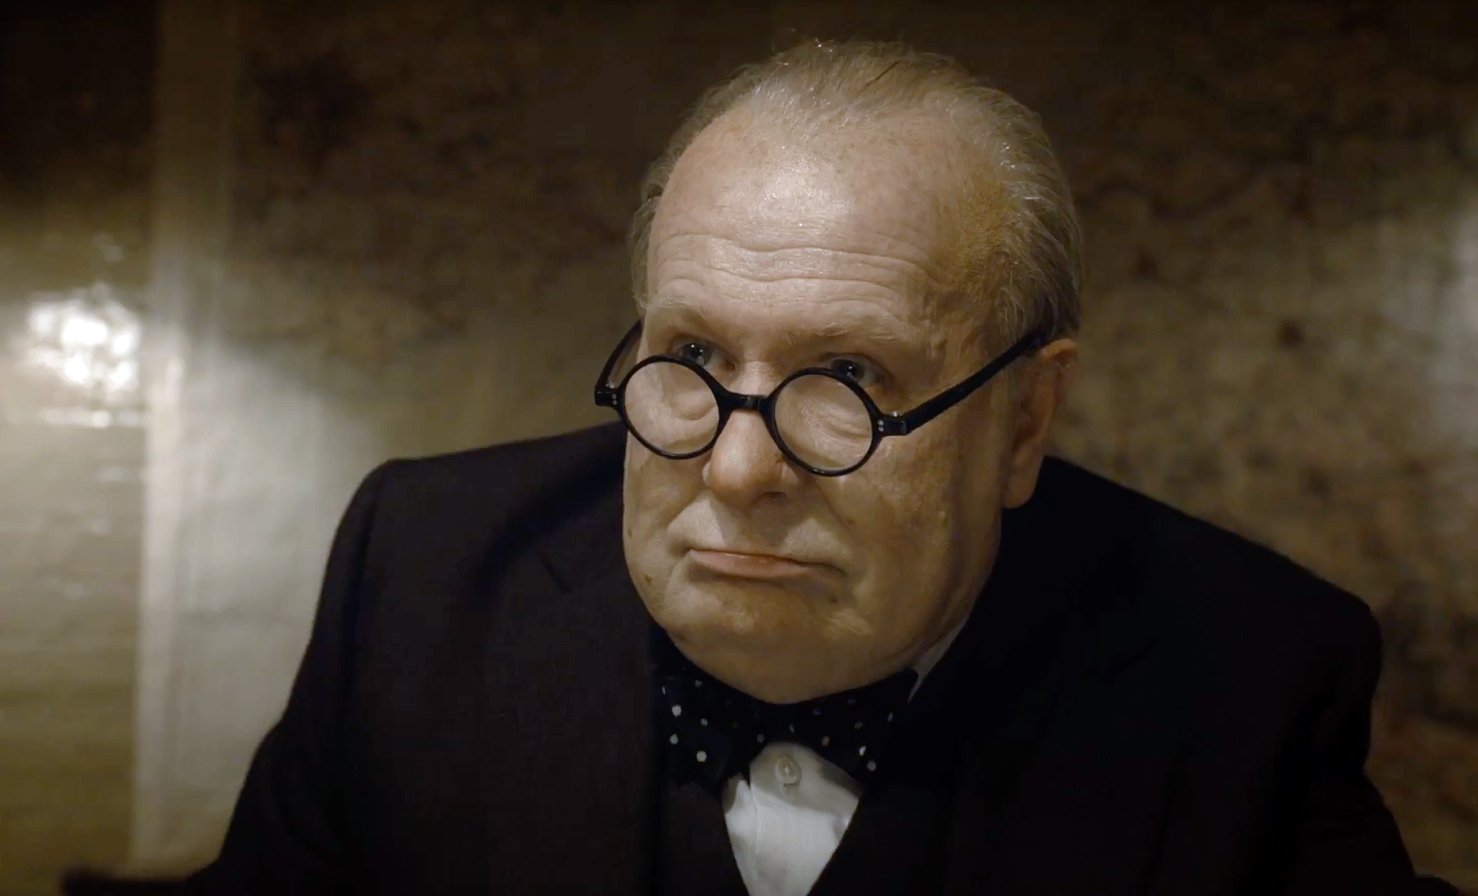 Gary Oldman Portrays Iconic British Prime Minister Winston Churchill In Darkest Hour Trailer 